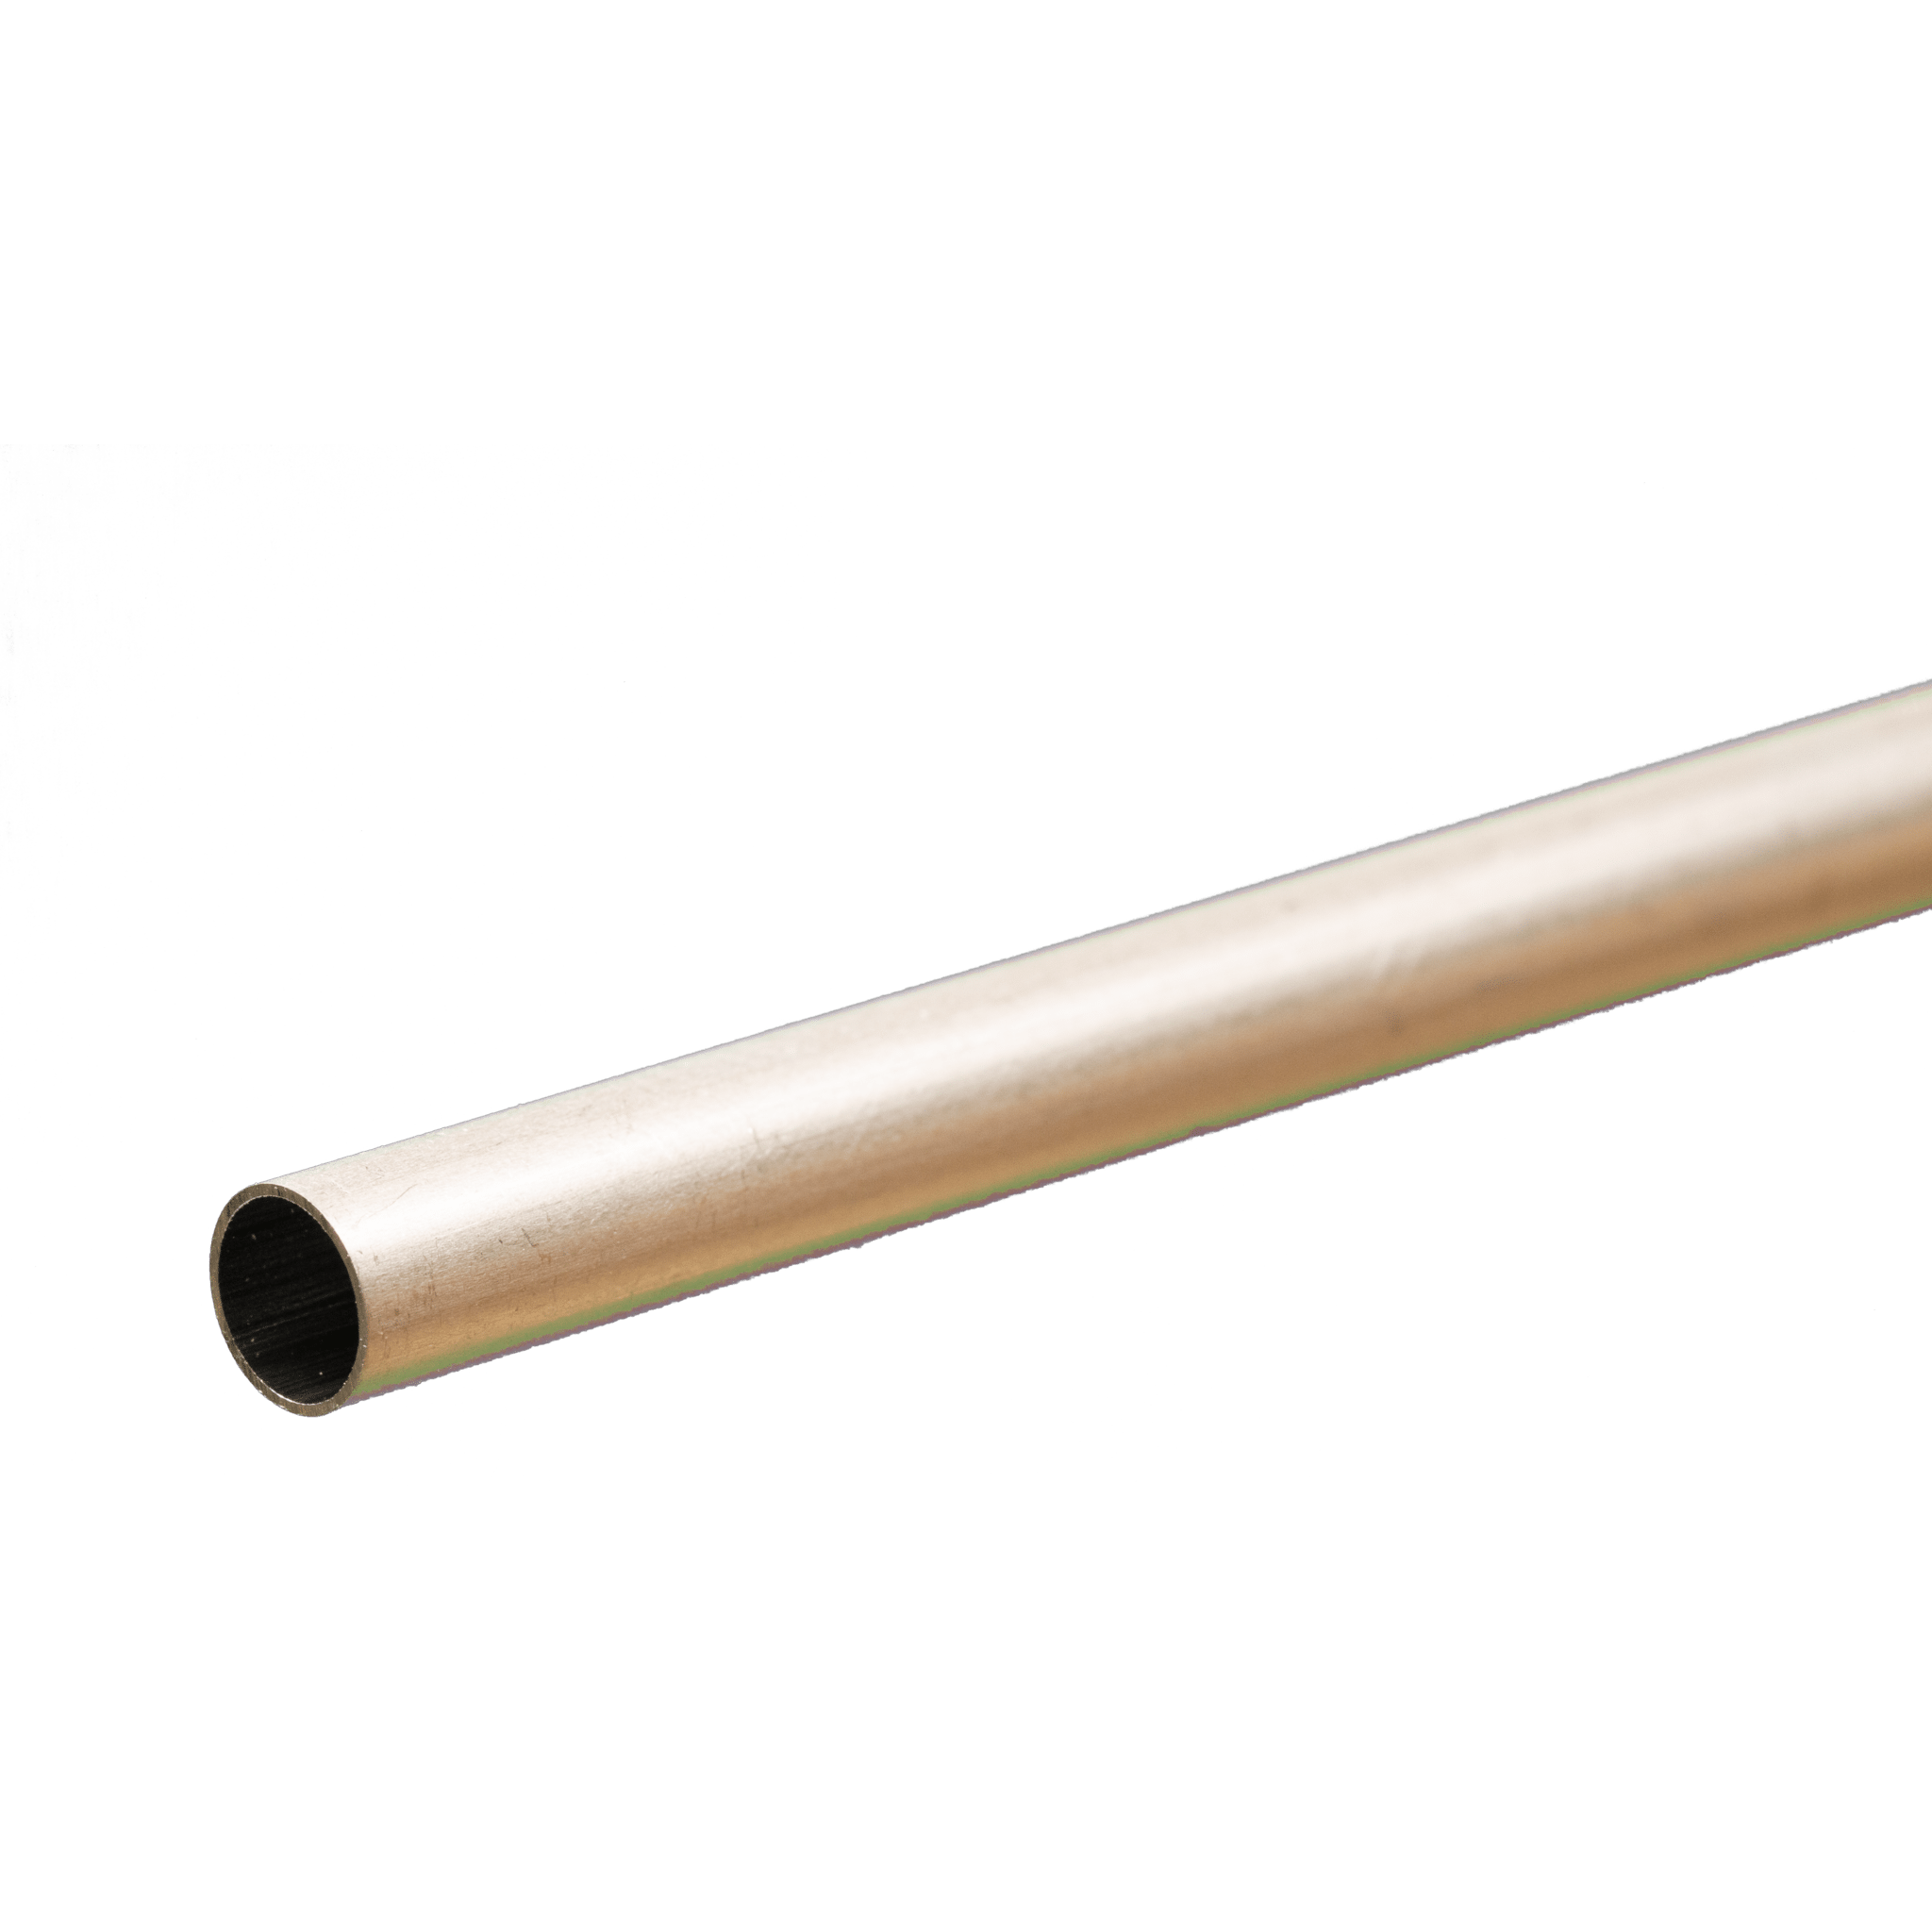 K&S Metals 8103 Round Aluminum Tube 5/32" OD x 0.014" Wall x 12" Long (1 Piece)